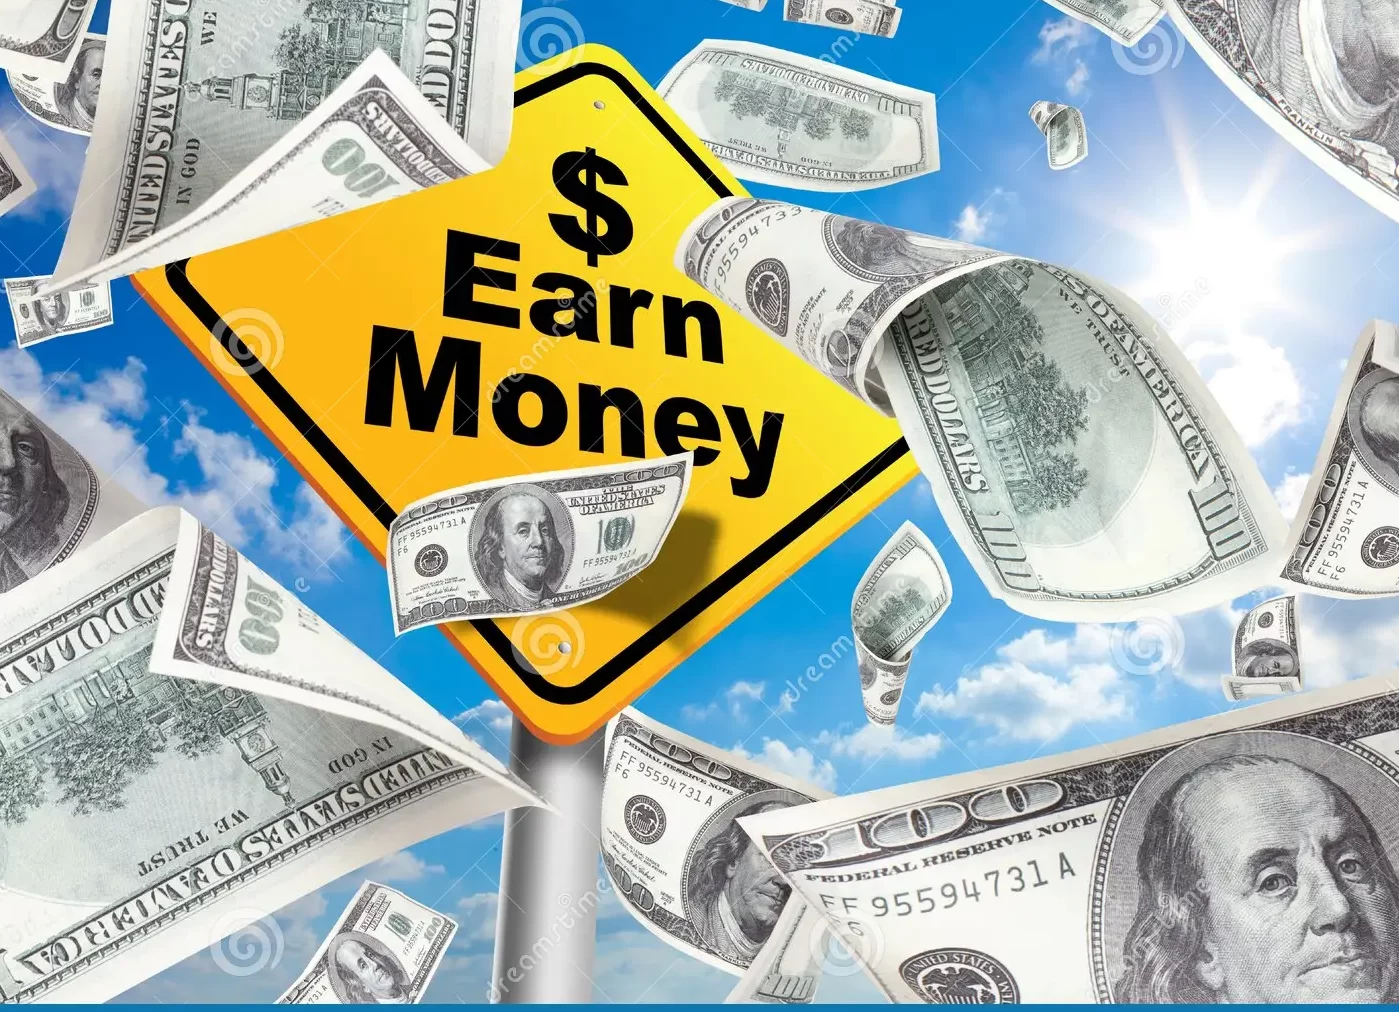 Earn money edited